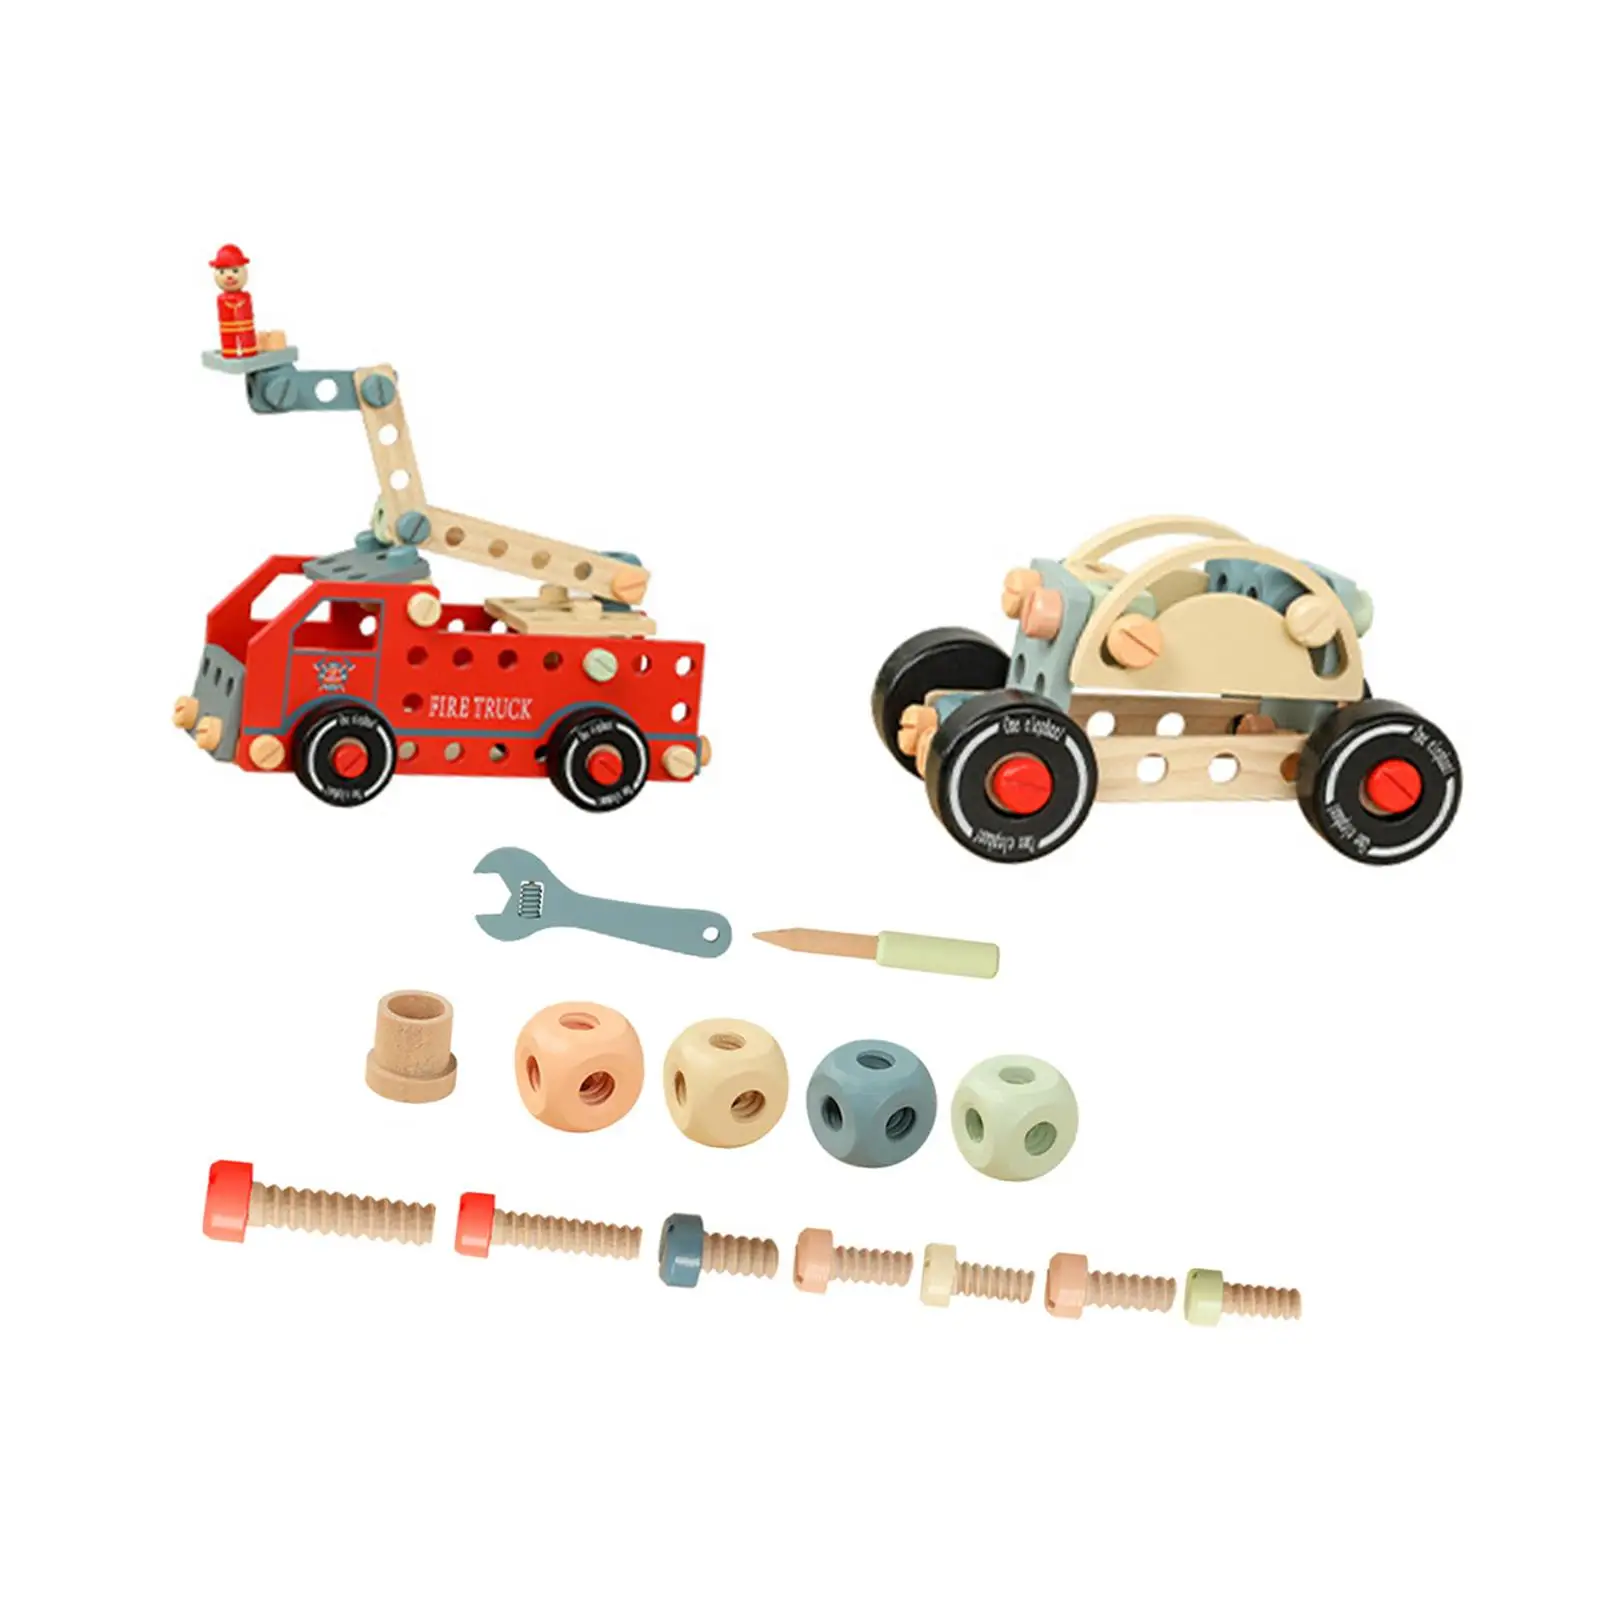 DIY Construction Toy Fine Motor Skills Portable Cognitive Wooden Tool Set for Education Outdoor Activities Preschool Indoor